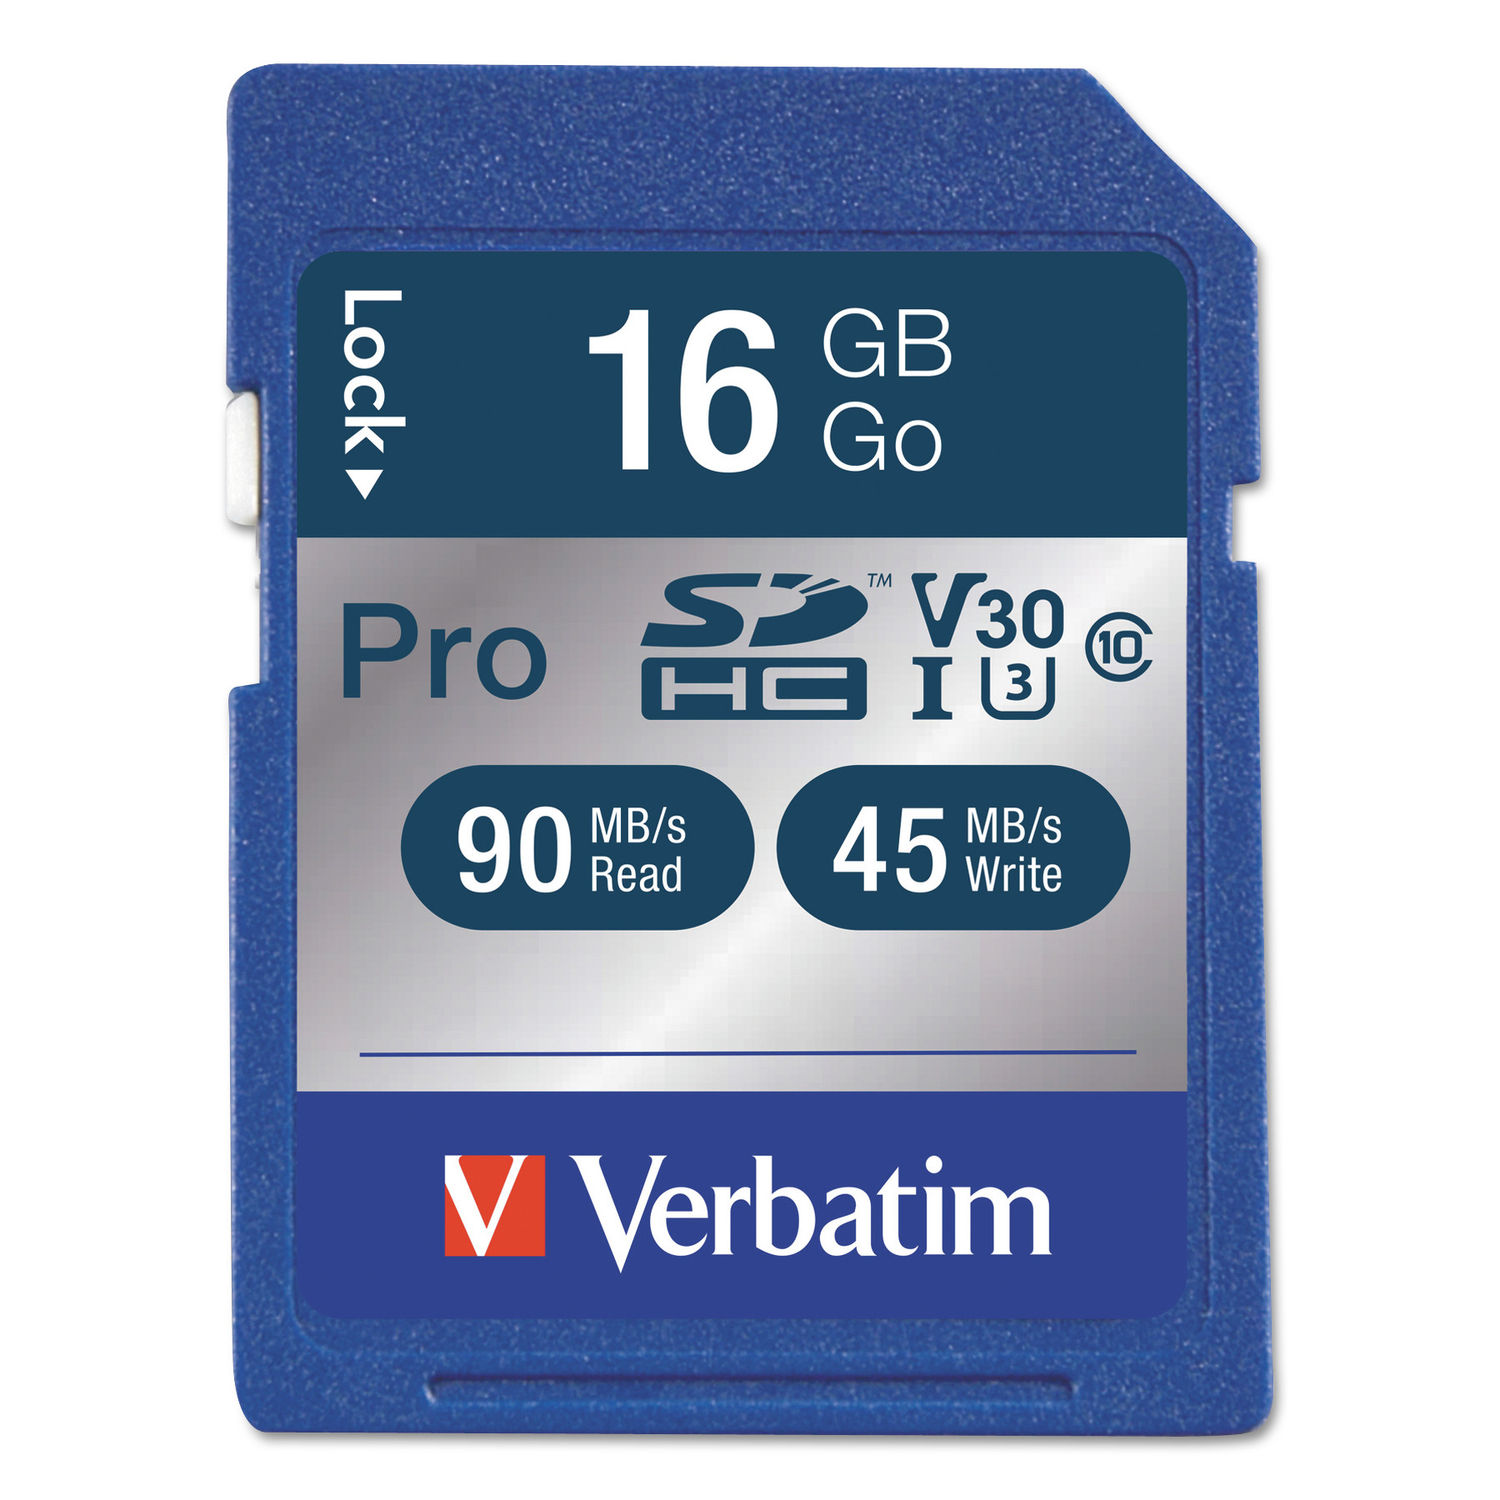 16GB Pro 600X SDHC Memory Card by Verbatim® VER98046 